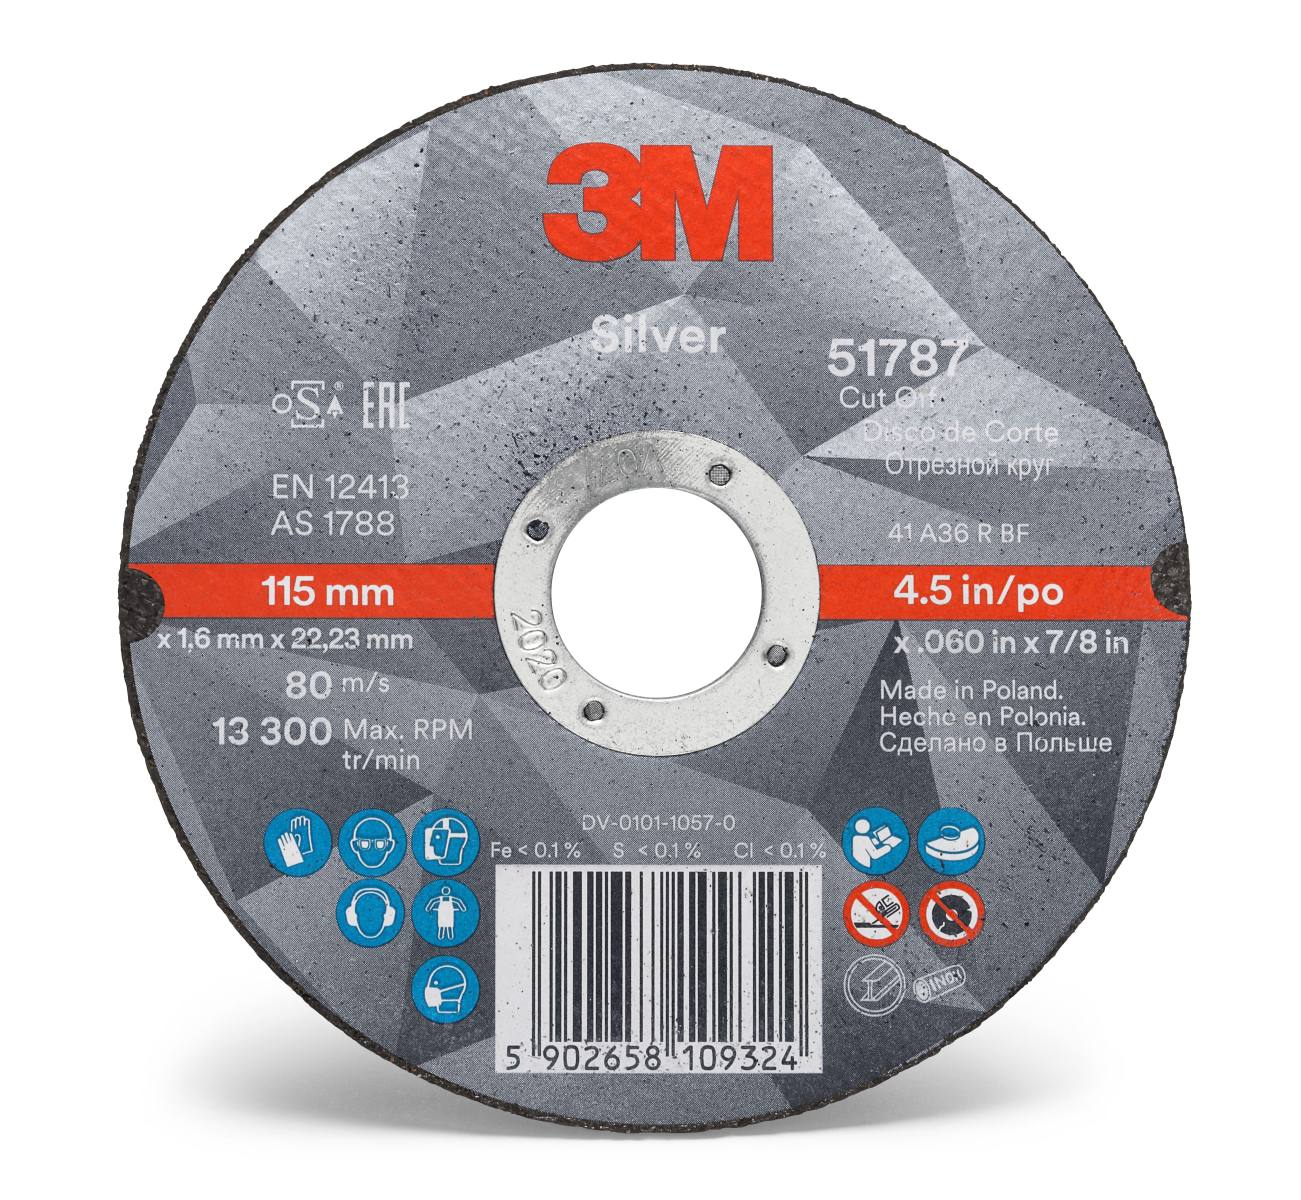 3M Silver Cut-Off Wheel Trennscheibe, 75 mm, 1,0 mm, 6 mm, T41, 51765